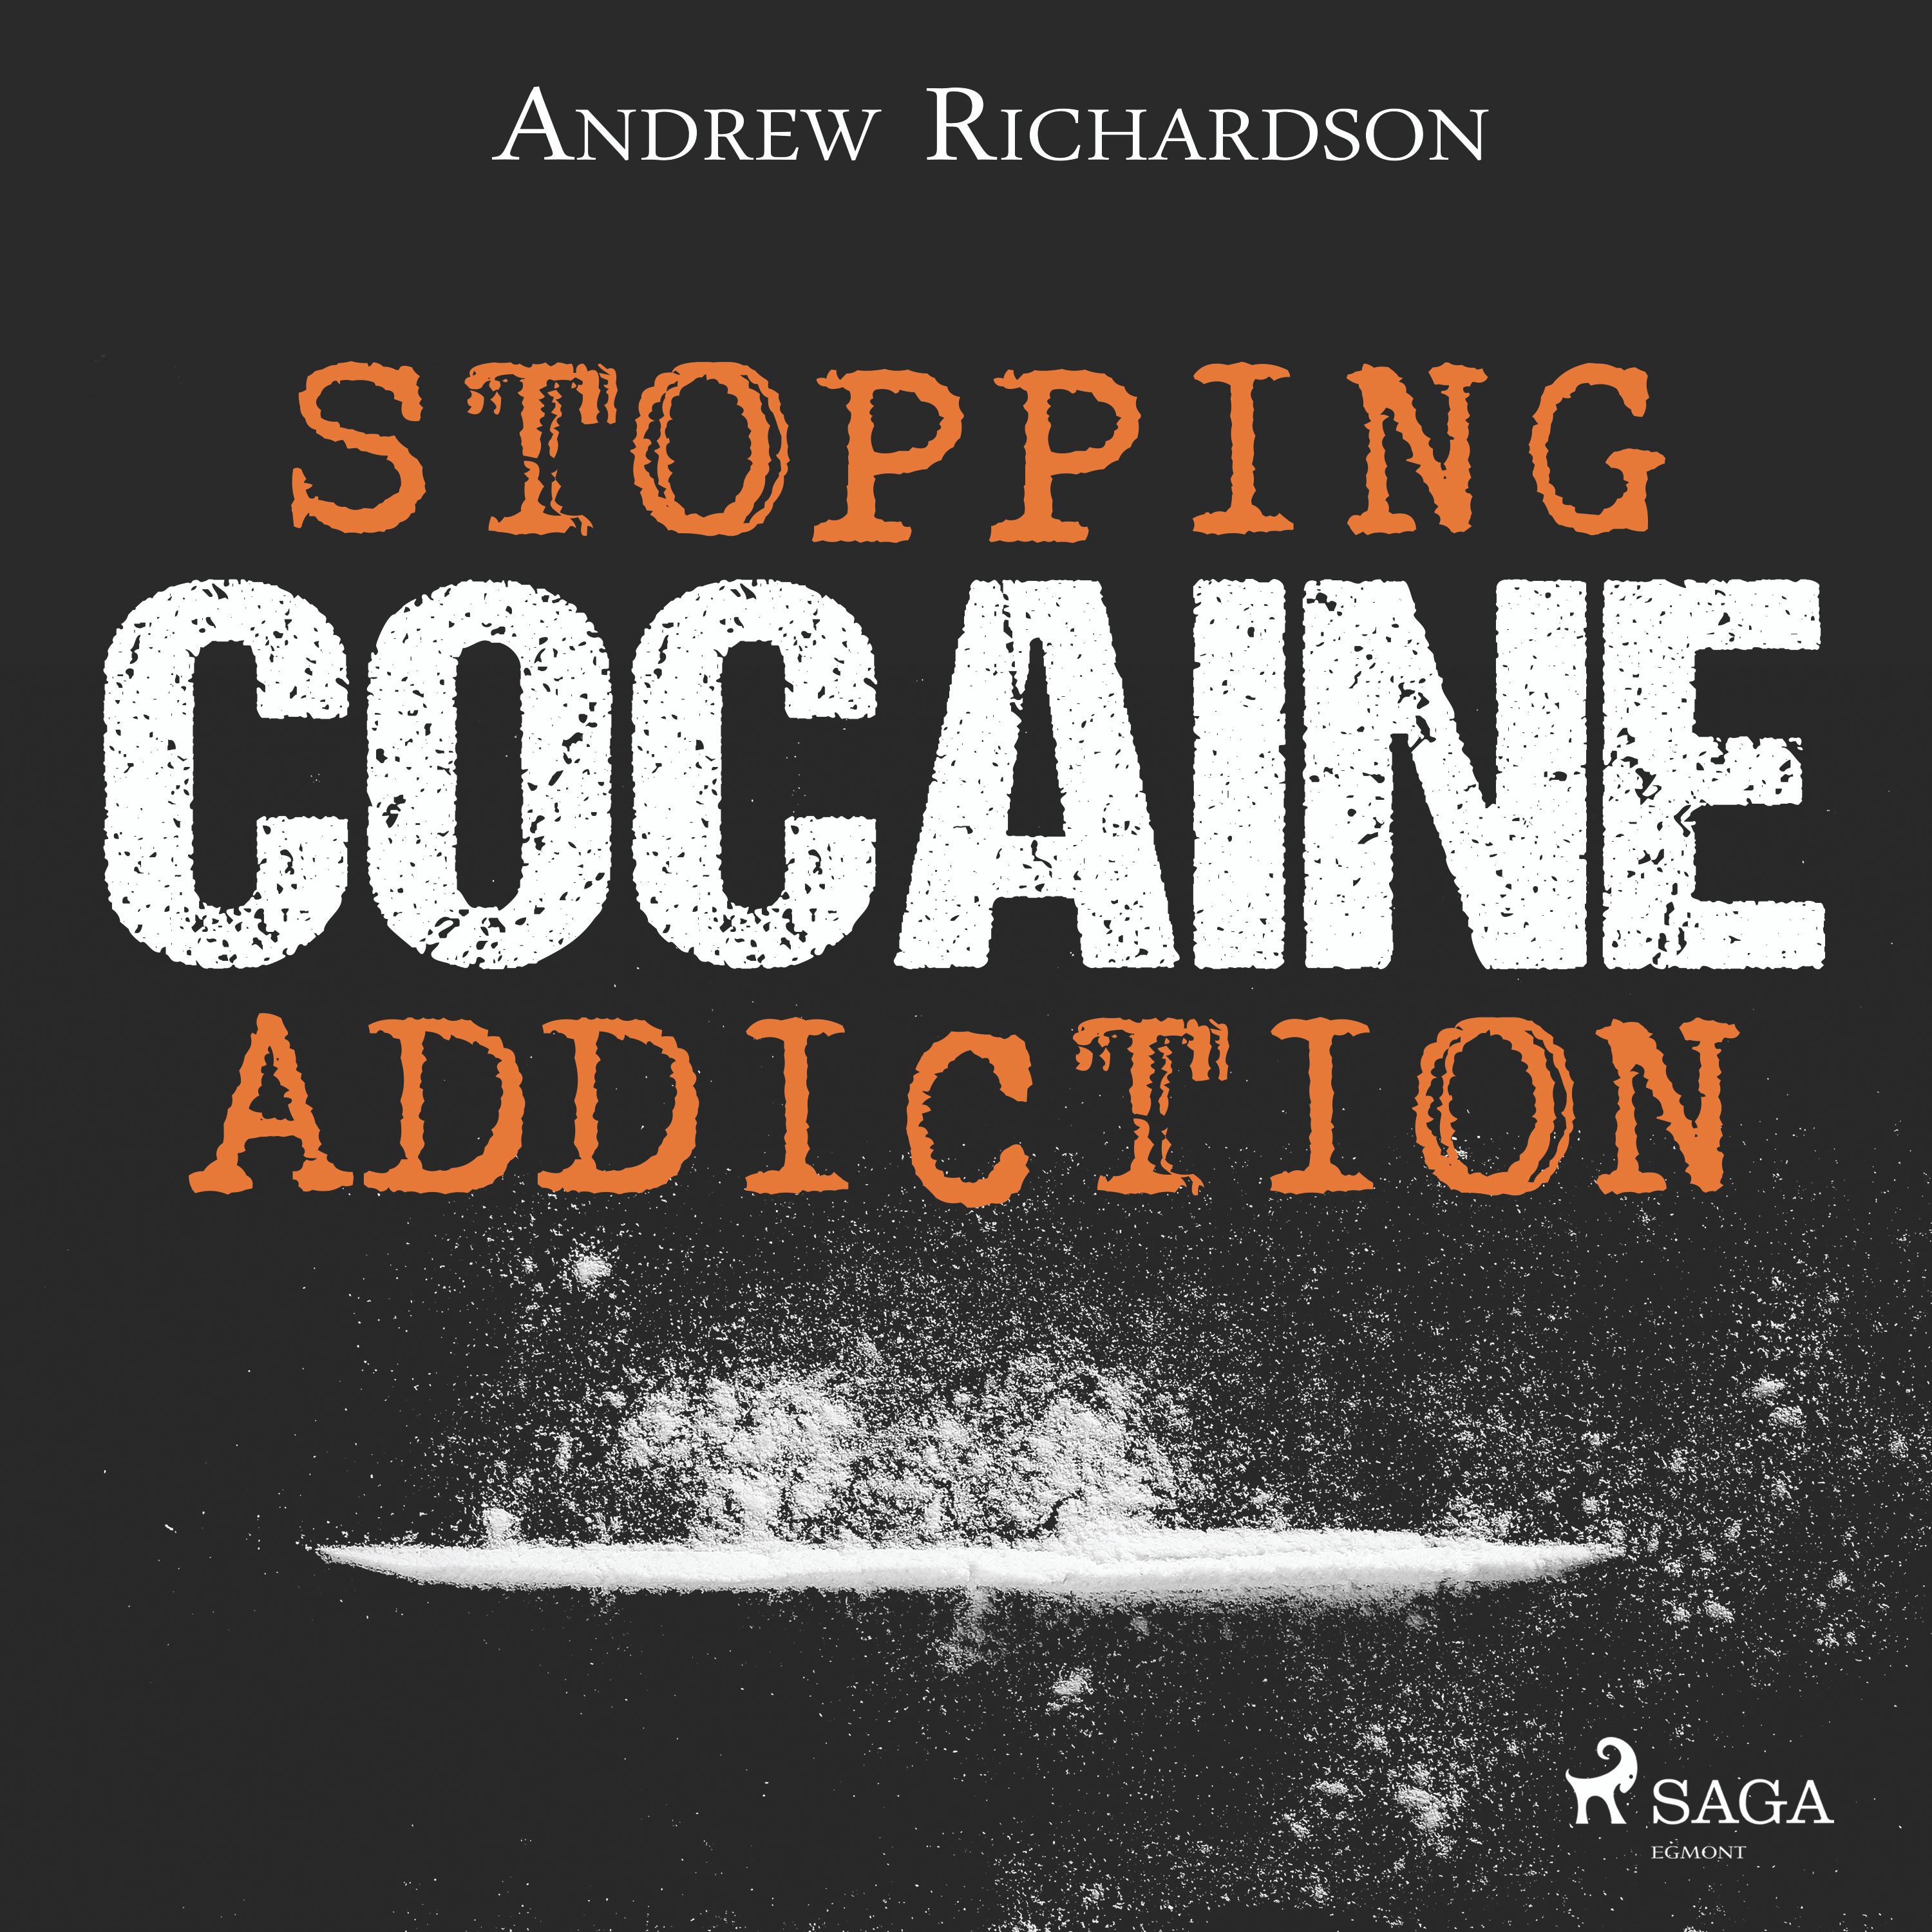 Stopping Cocaine Addiction, ljudbok av Andrew Richardson